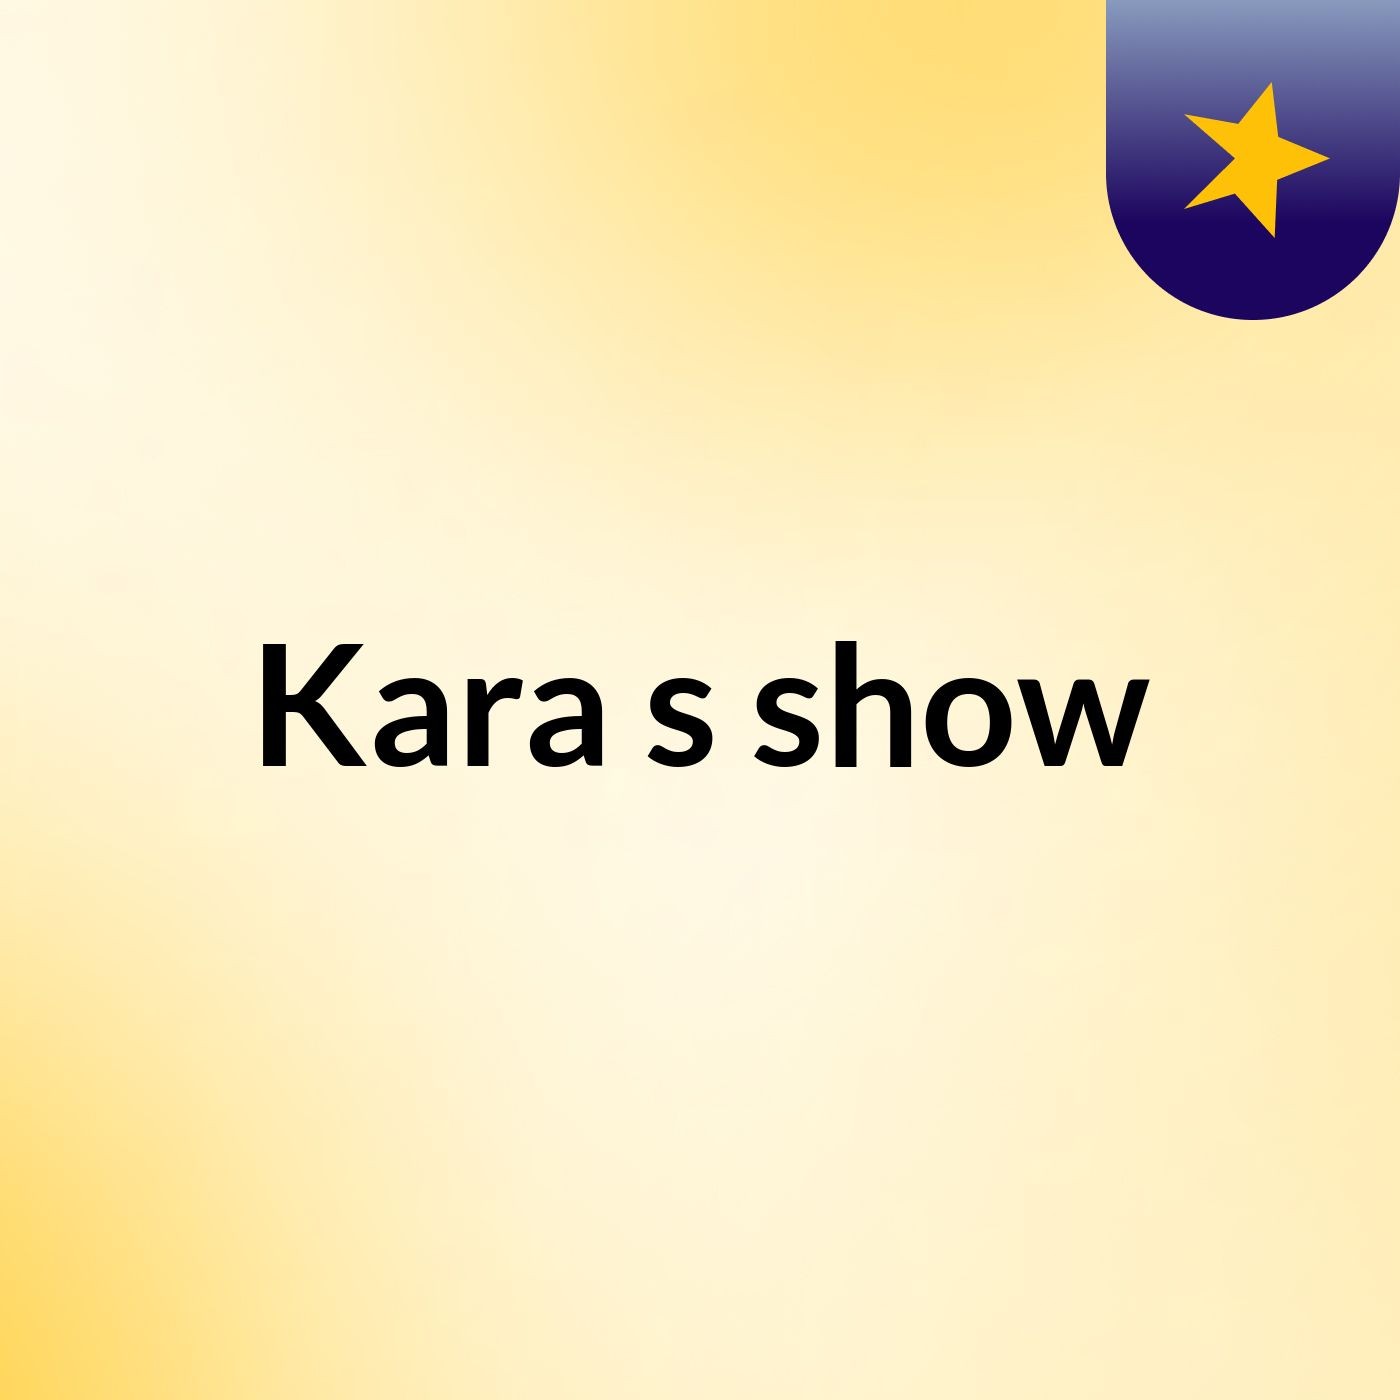 Kara's show